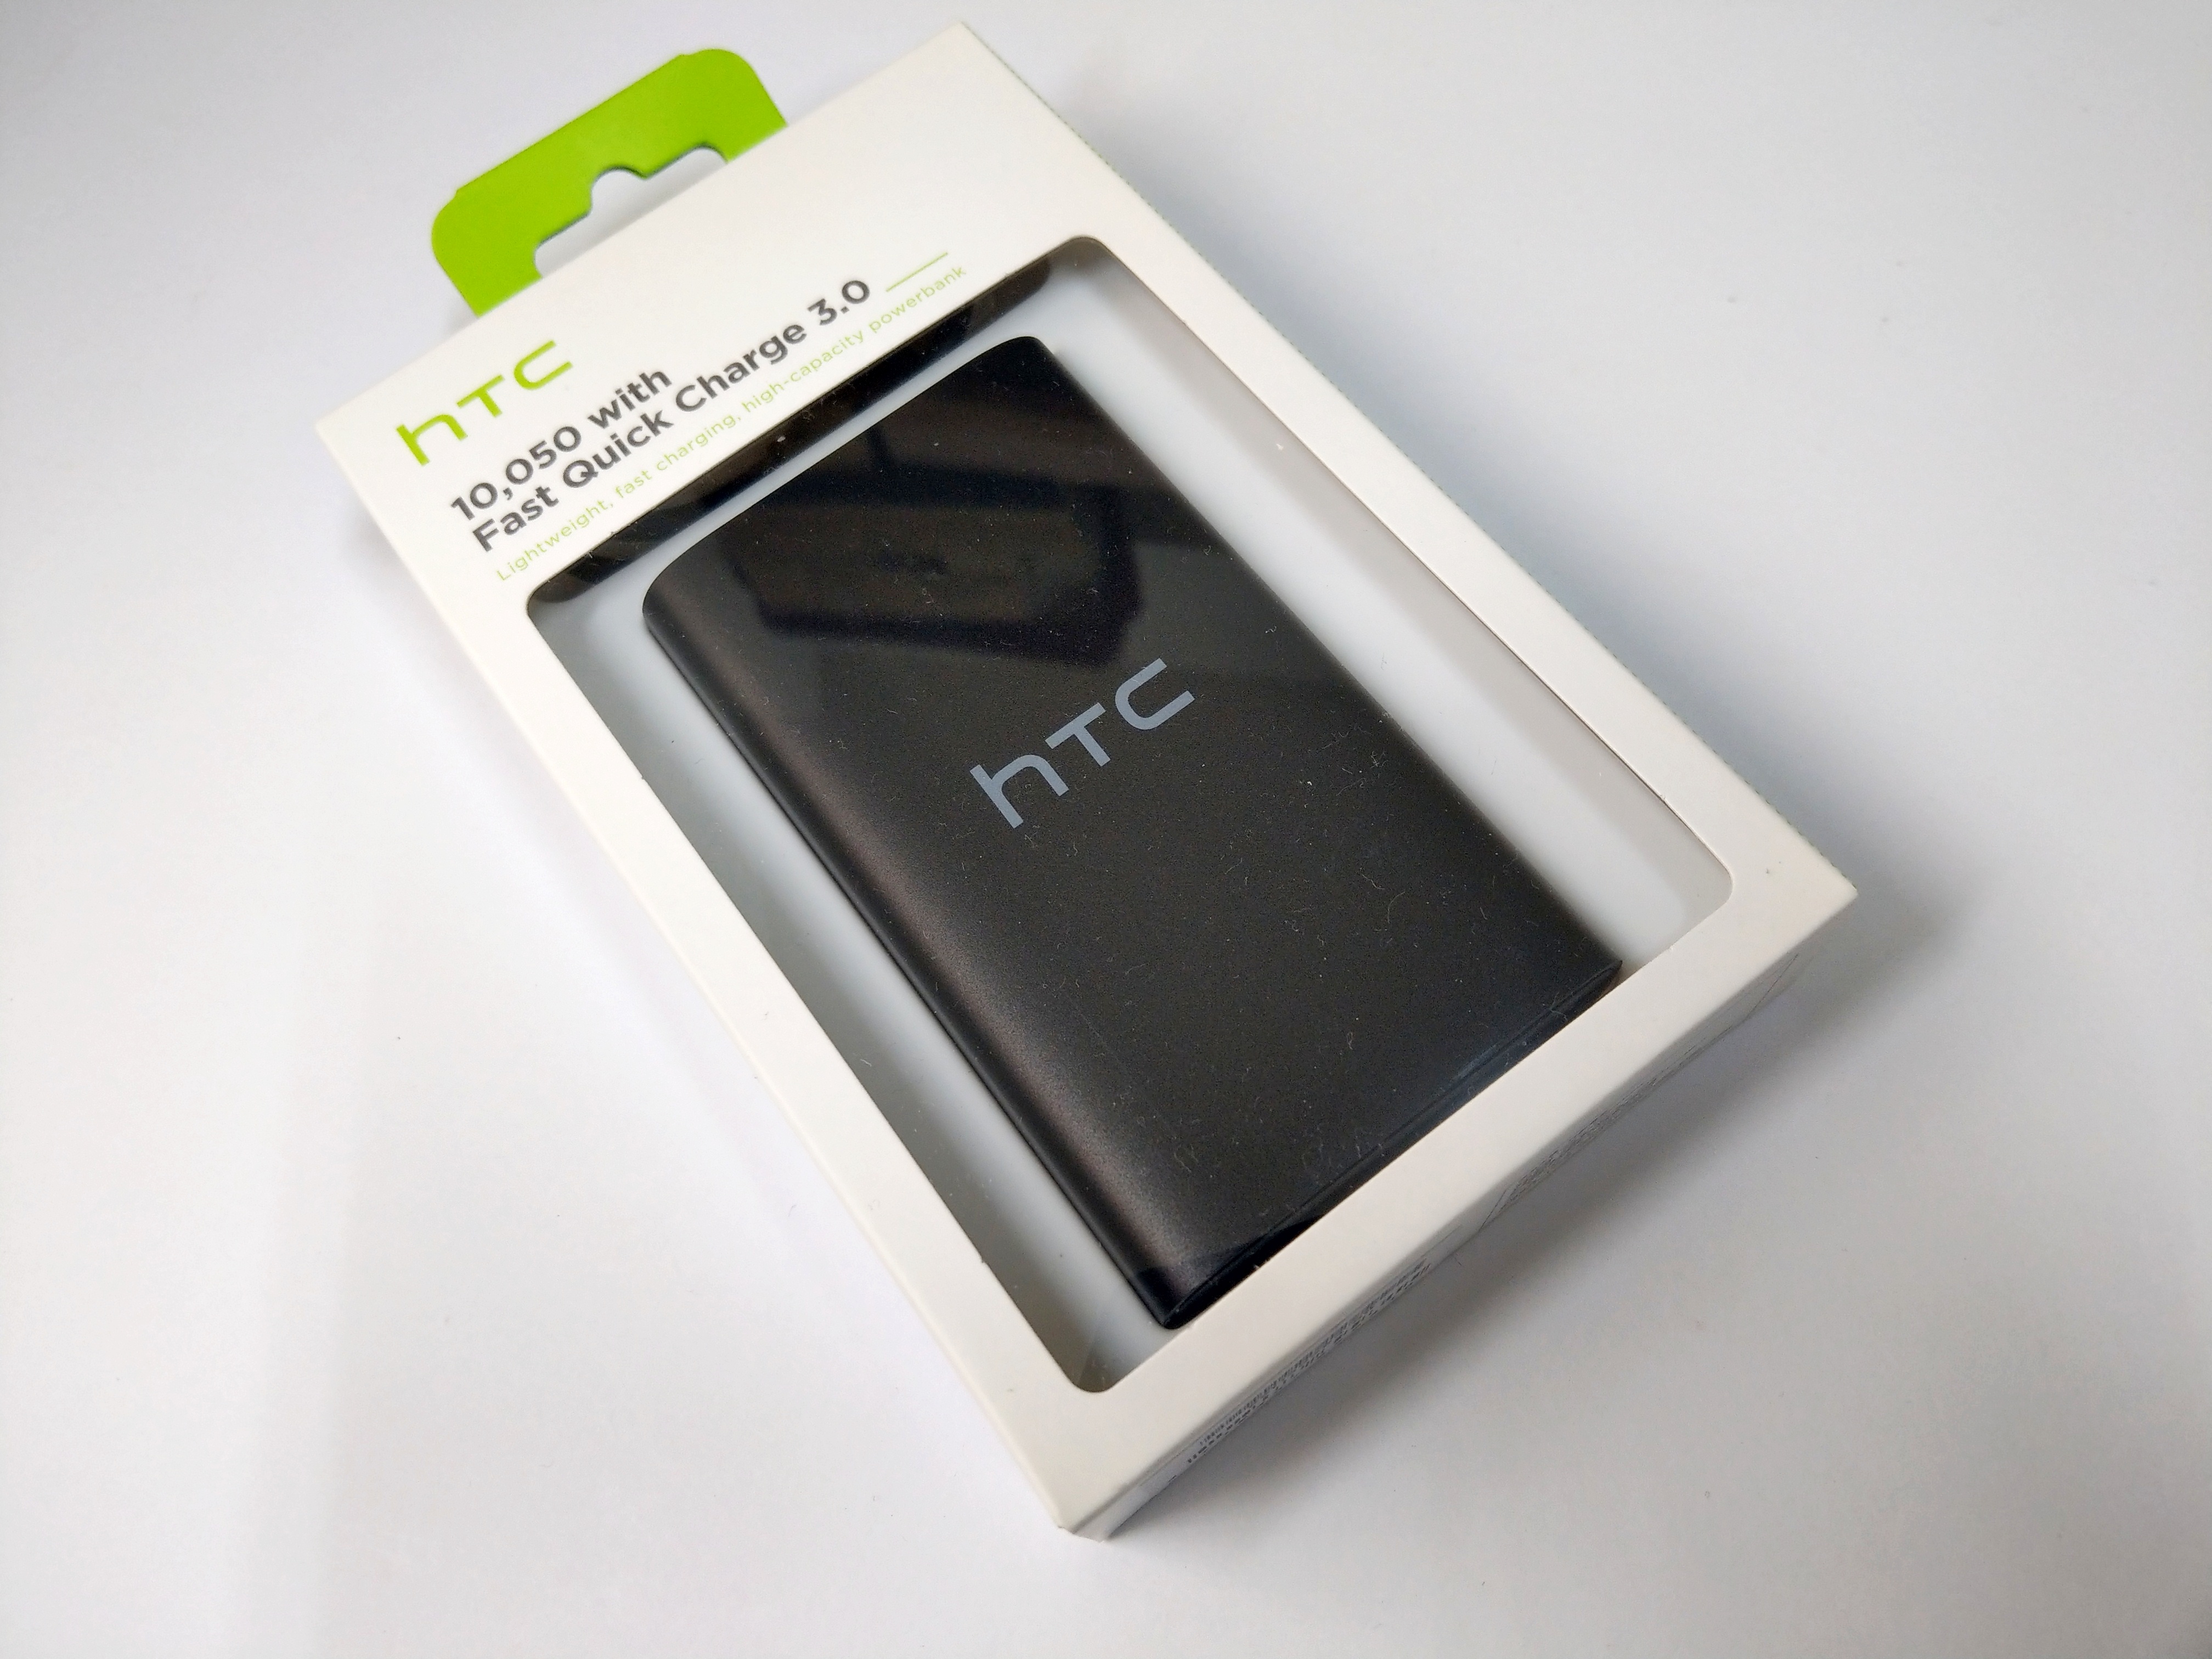 ［開箱］HTC雙向QC 3.0快充行動電源 - android, apple, htc, htc u11, ios, ipad, ipadpro, qc3.0, quick charge, type-c, usb, 充電寶, 行動電源 - 科技生活 - teXch